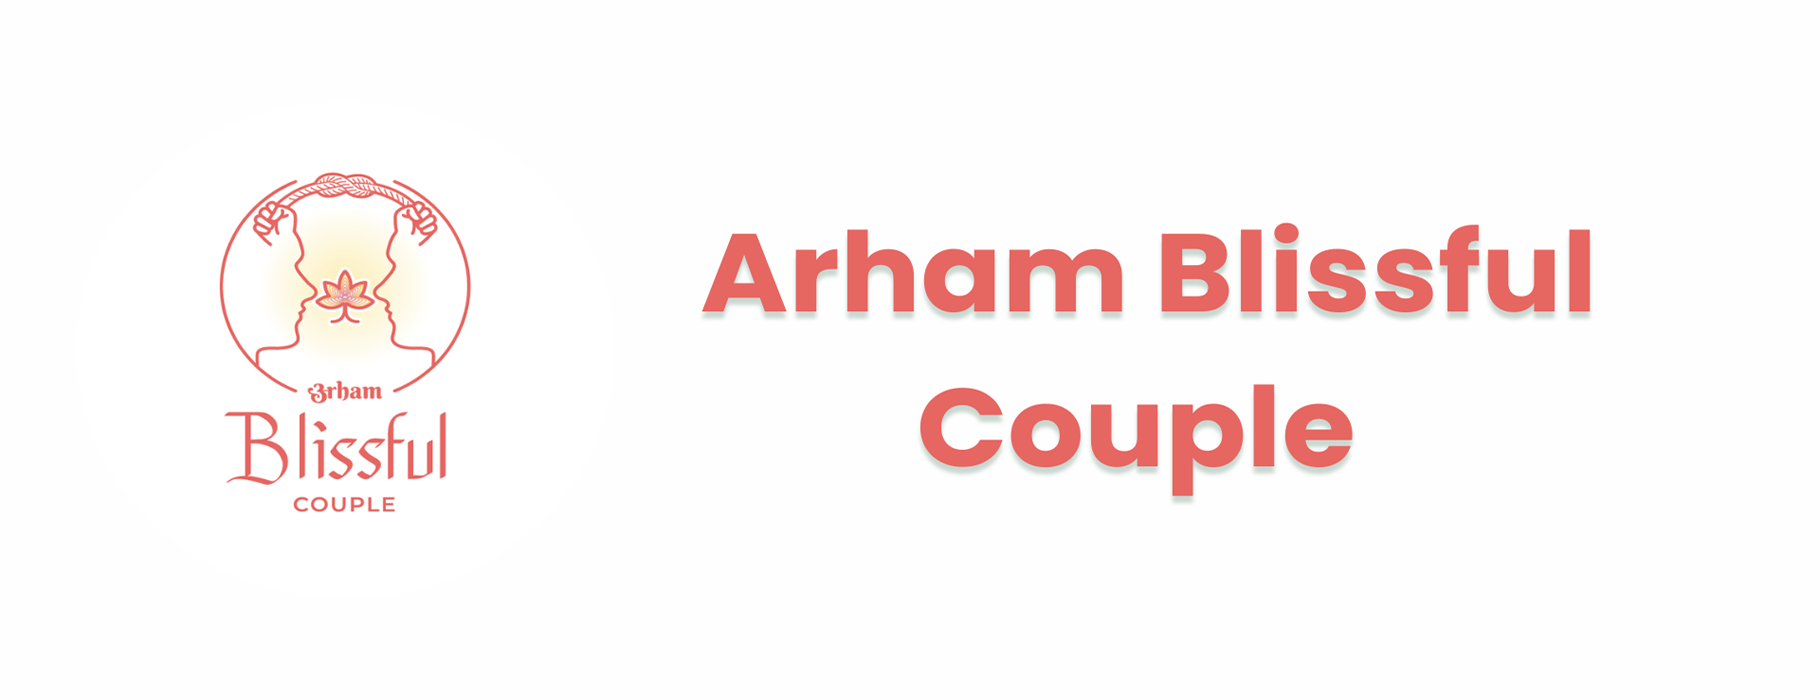 Arham Blissful Coupl